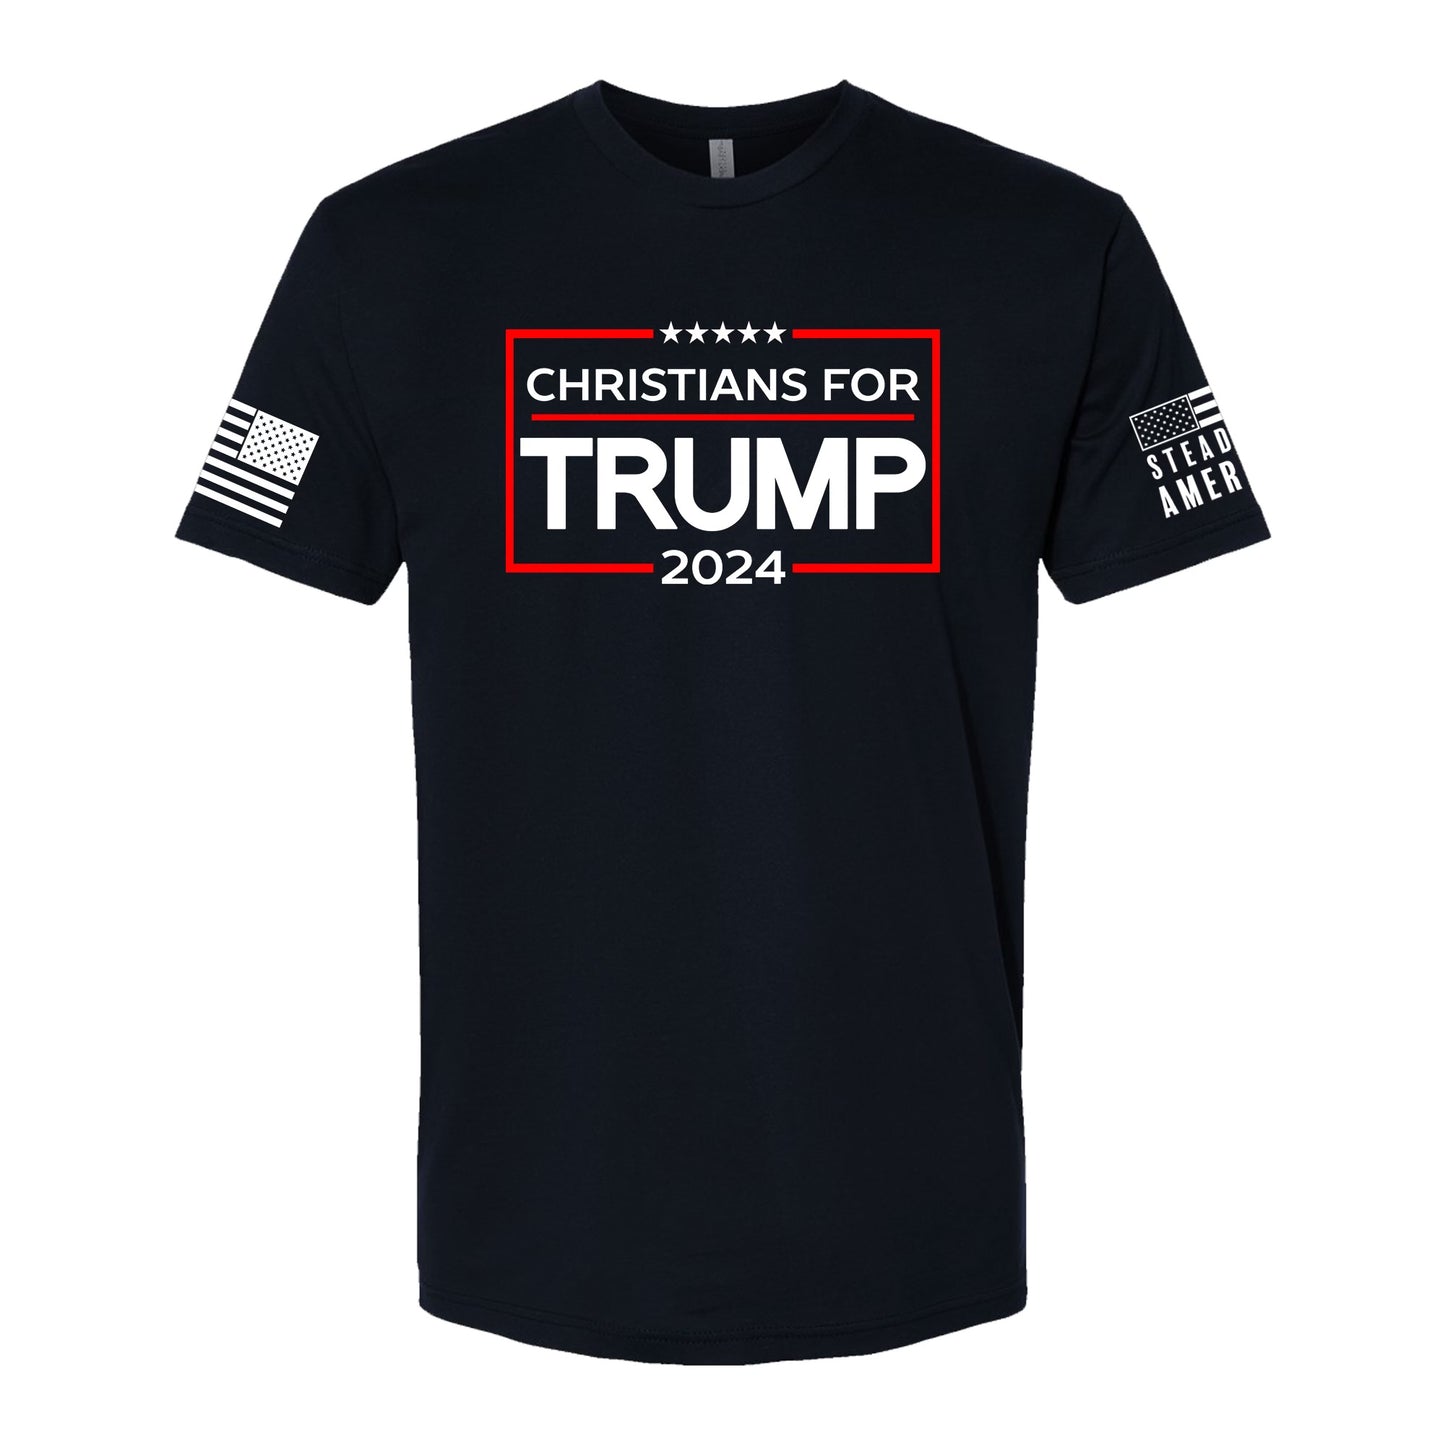 Christians for Trump 2024 T-Shirt